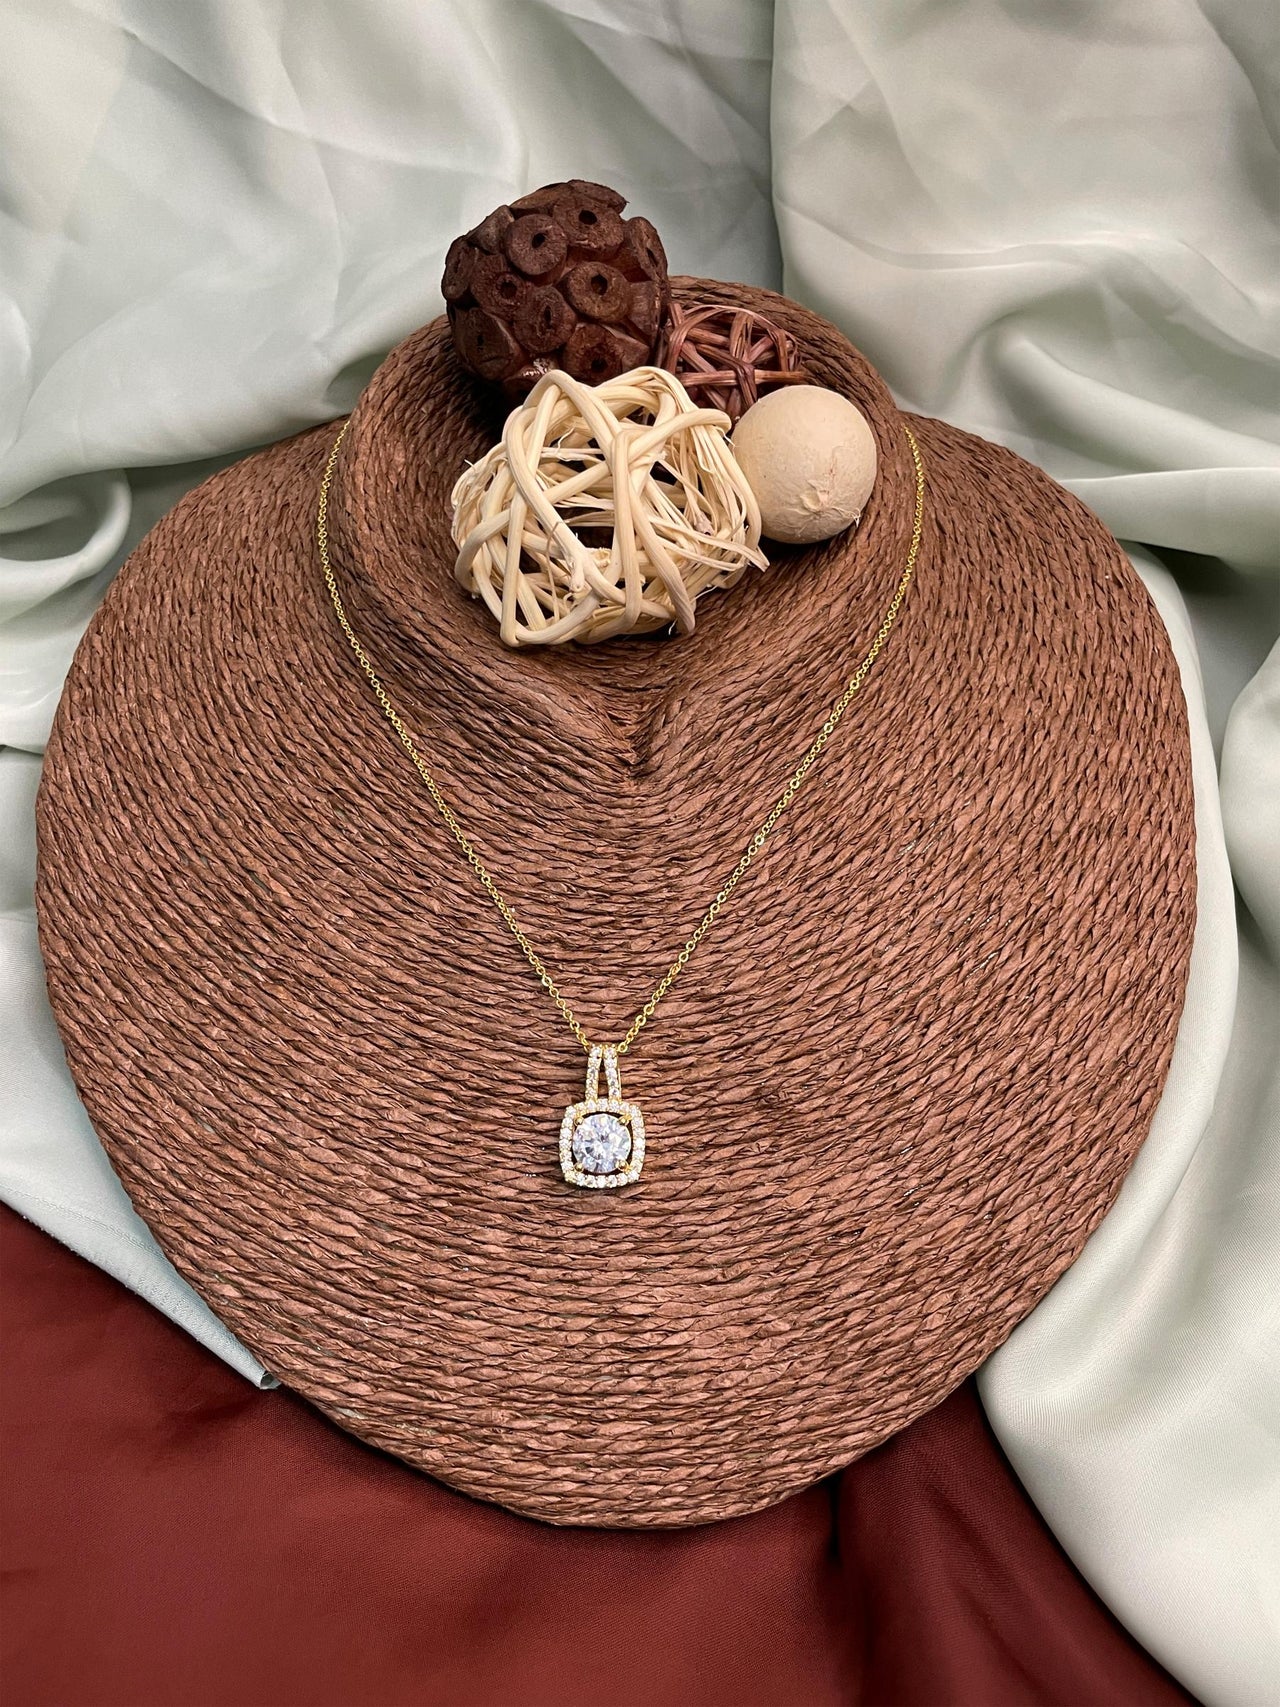 Round Gold Pendant Necklace Chain - Abdesignsjewellery